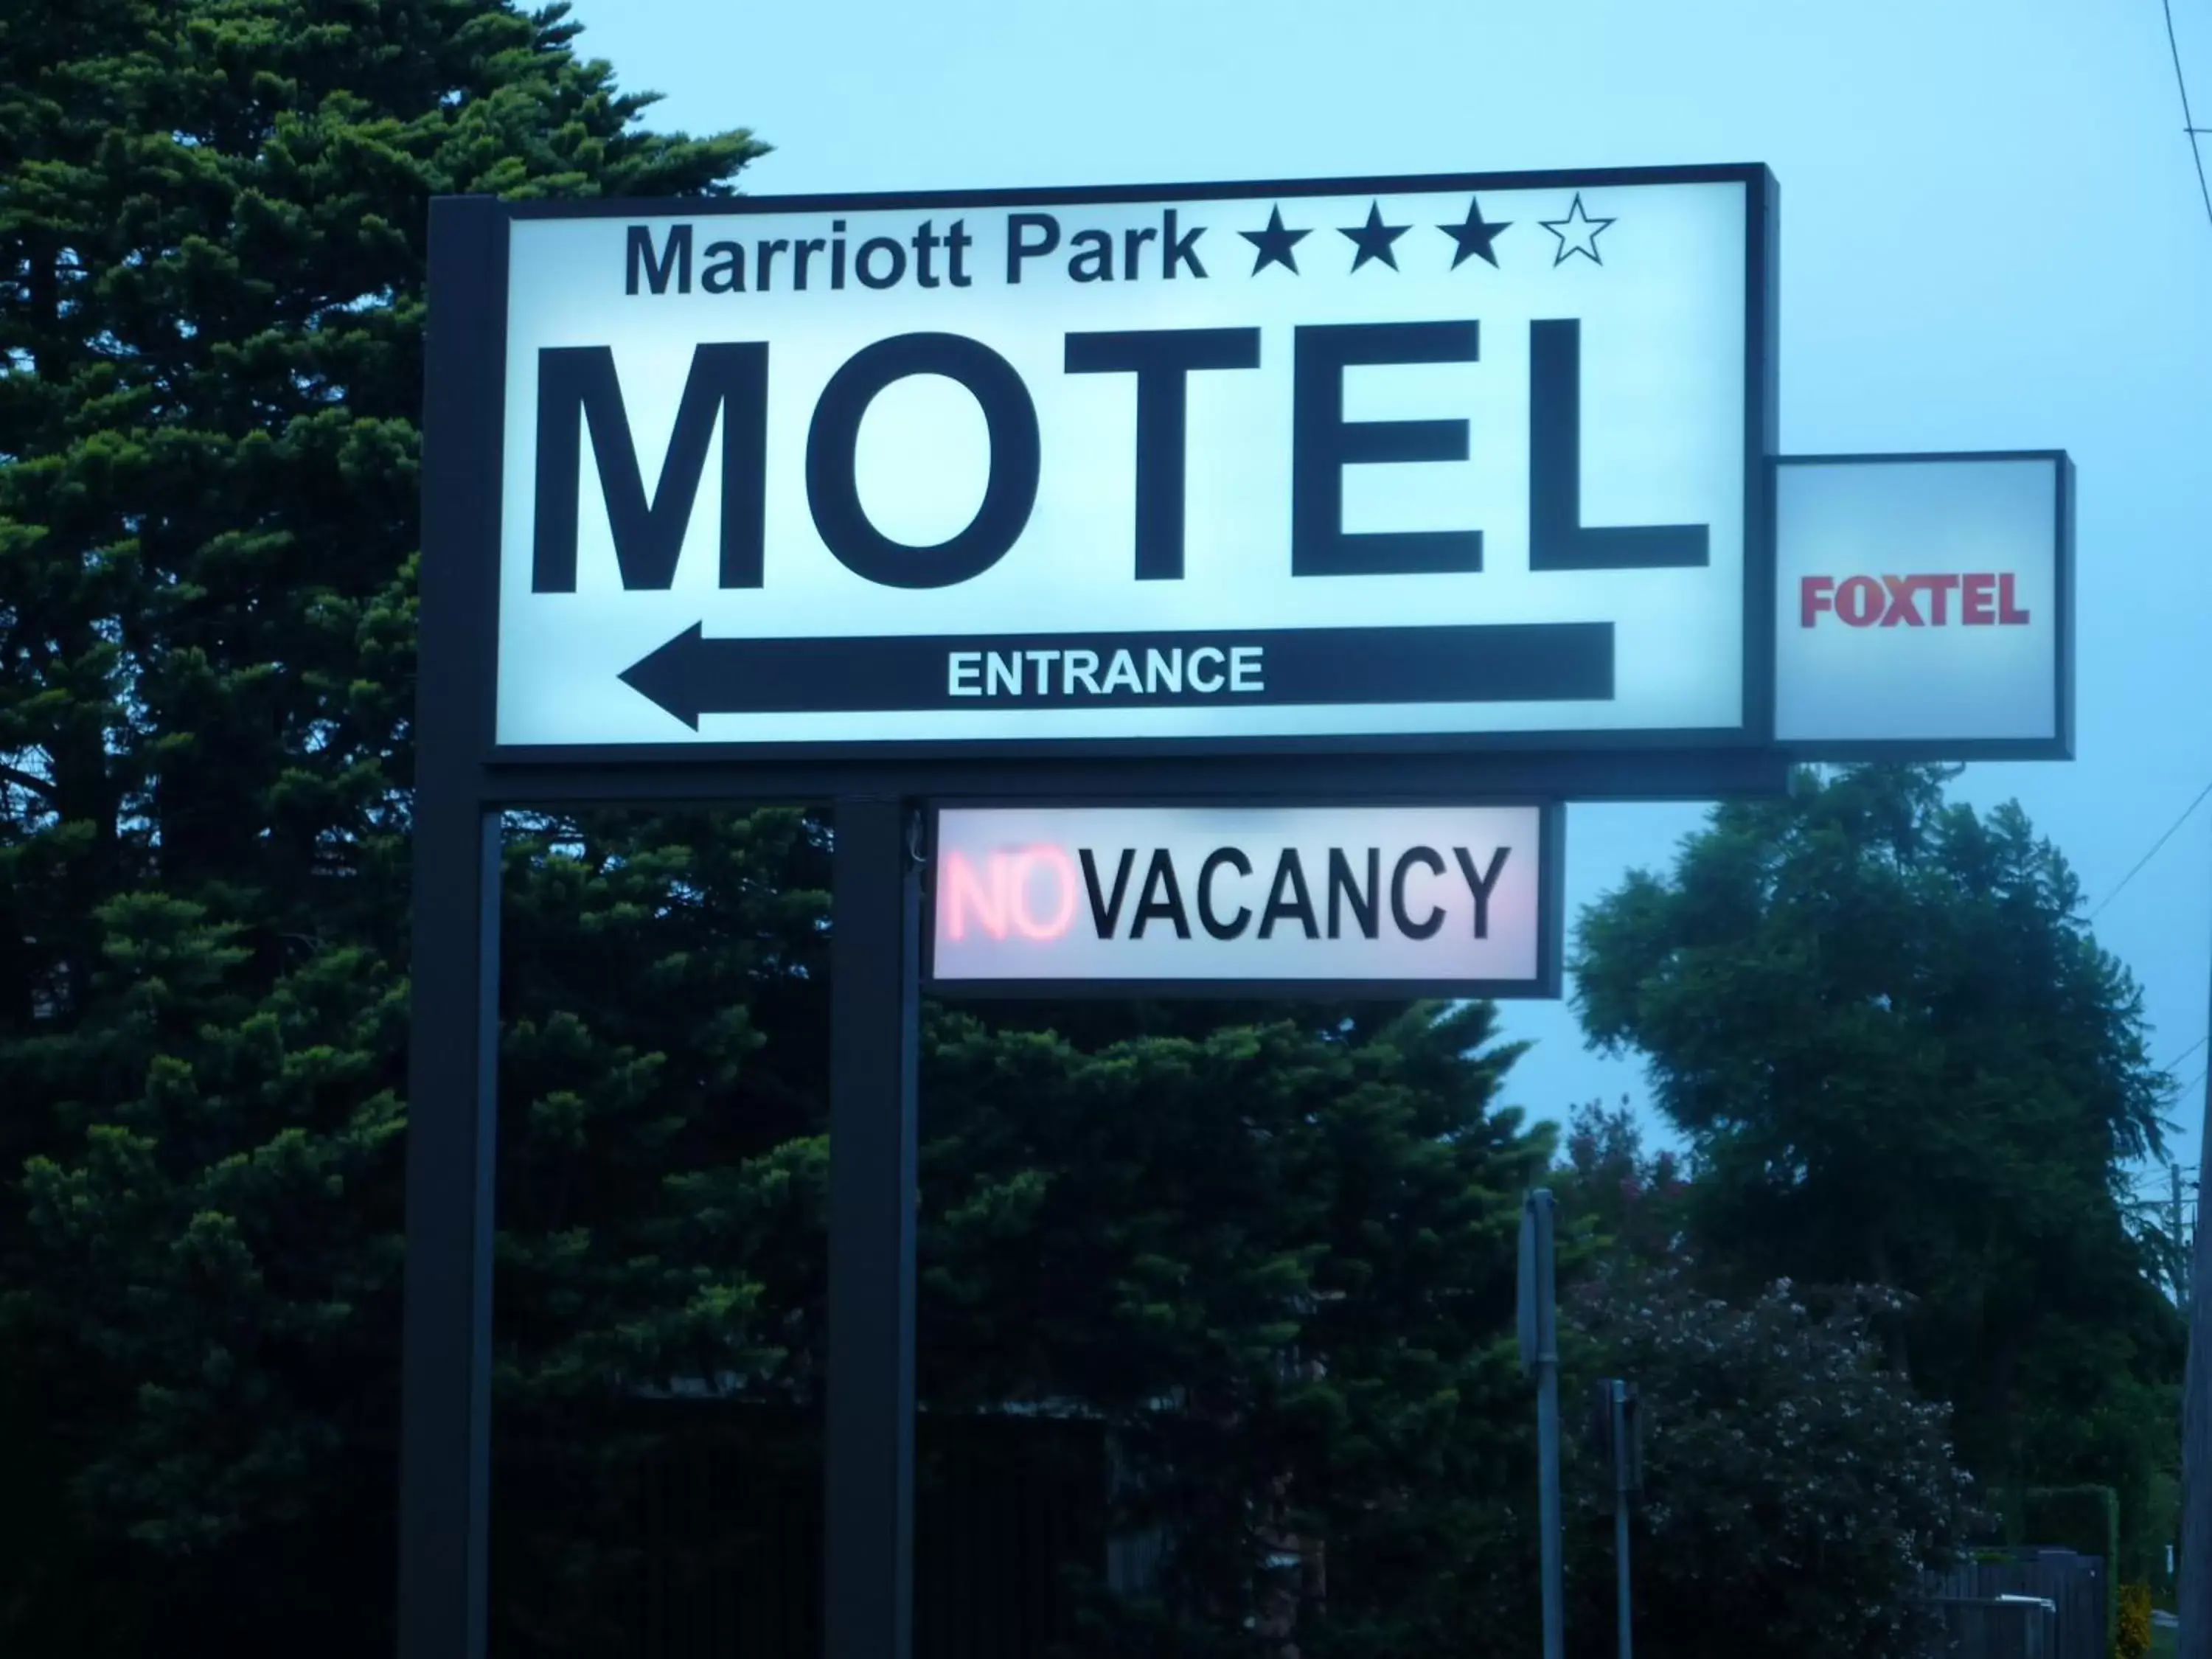 Property logo or sign in Marriott Park Motel